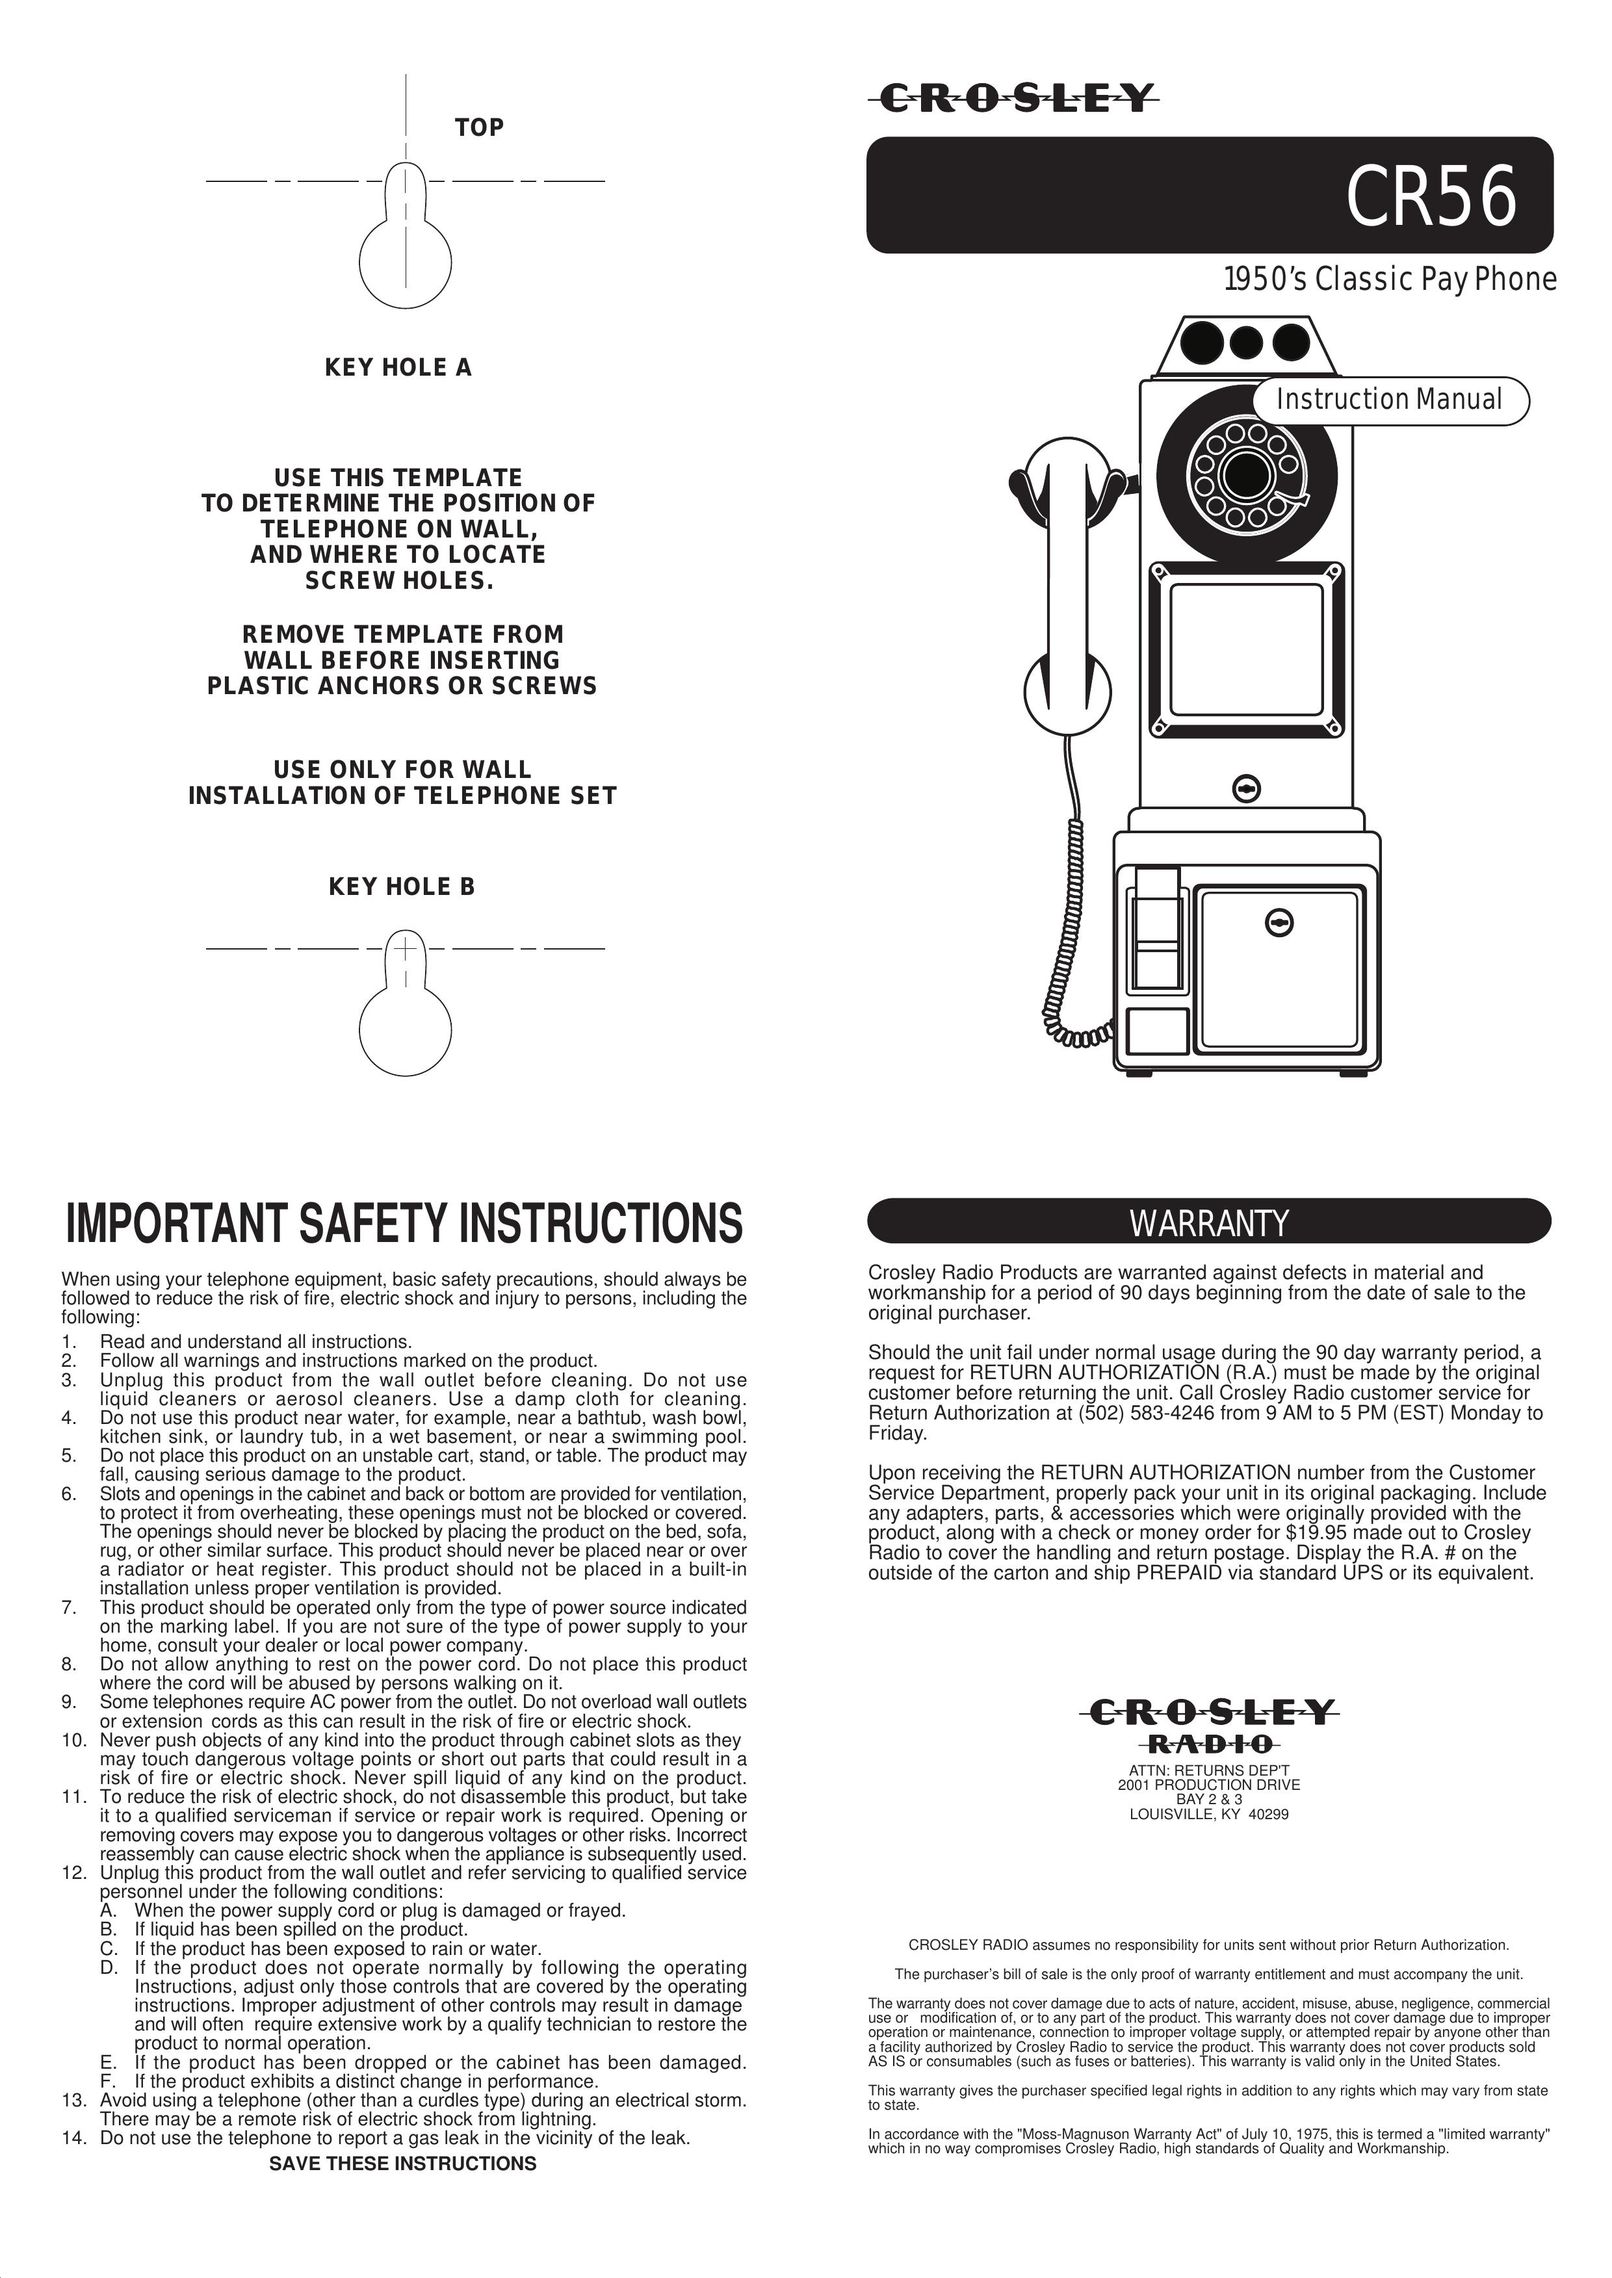 Crosley CR56 1950's Payphone Telephone User Manual